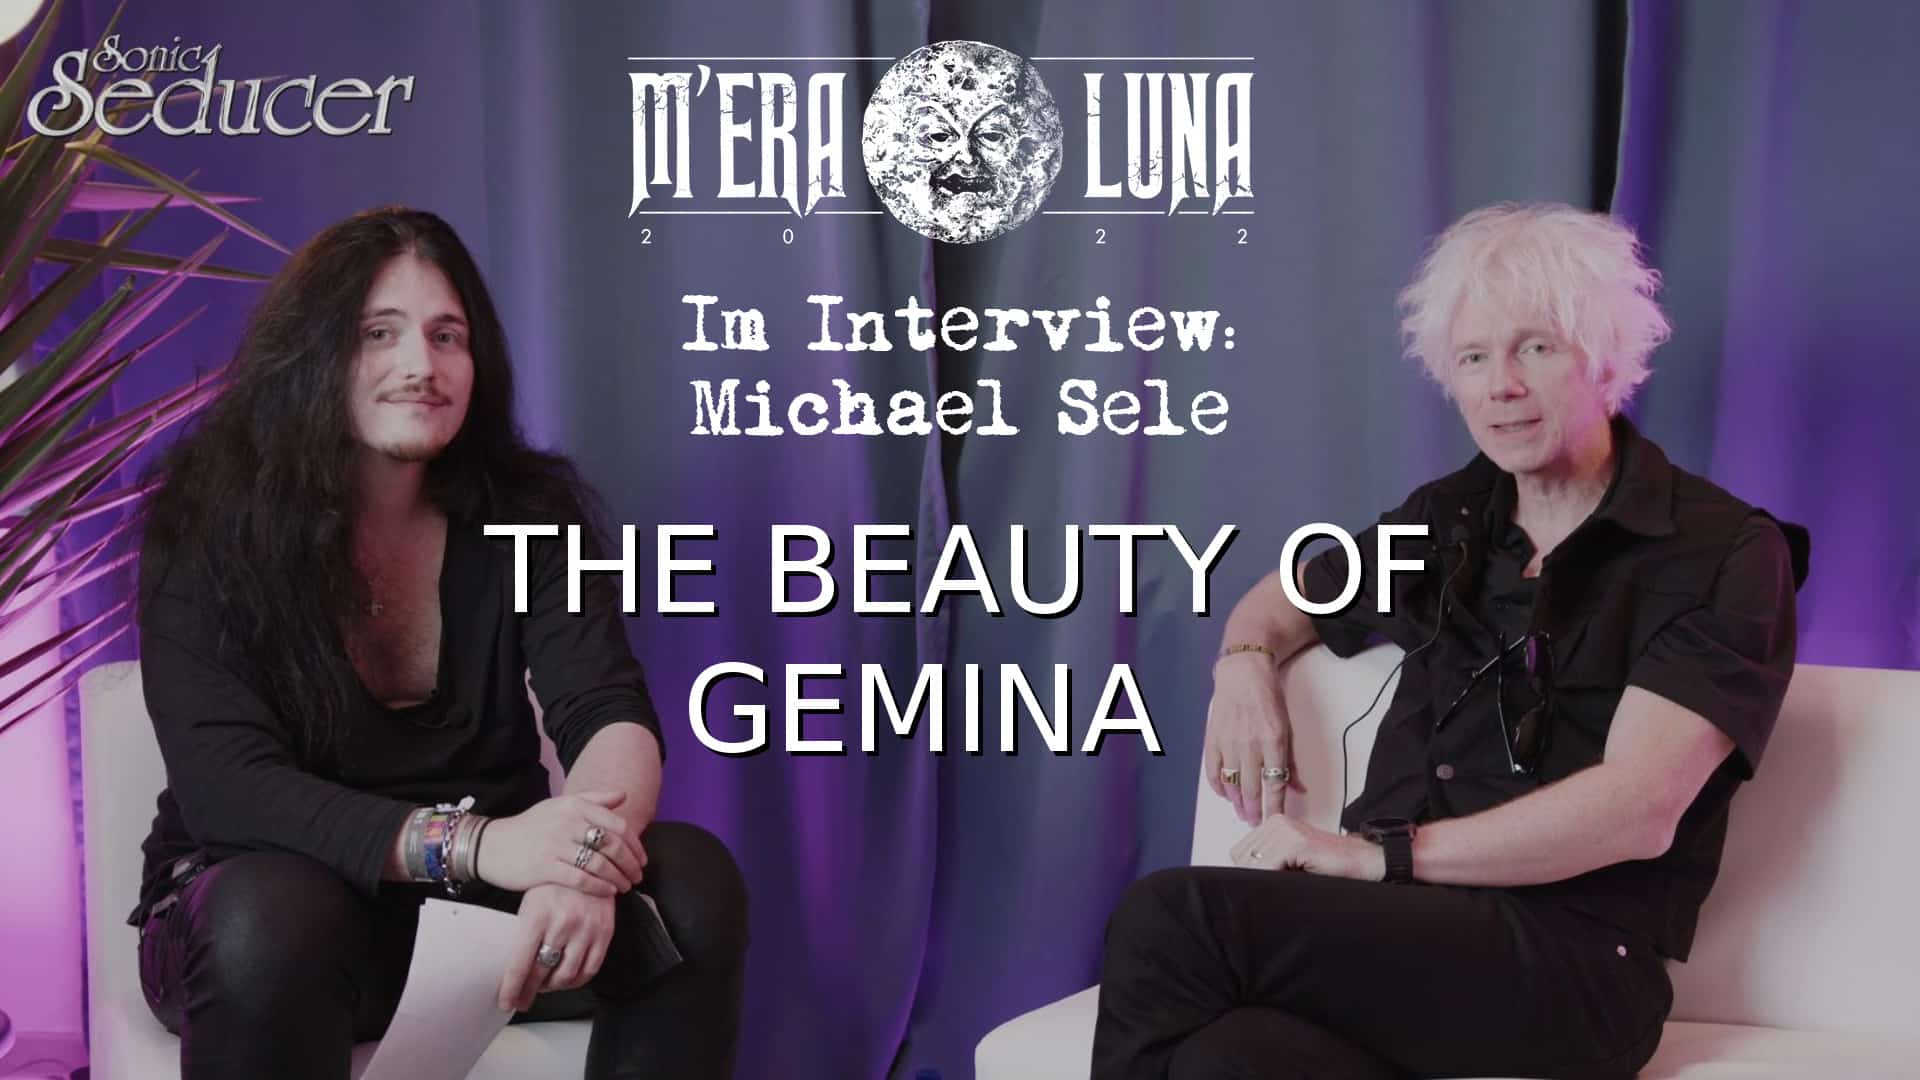 sonic-seducer-mera-luna-festival-2022-interview-michael-sele-the-beauty-of-gemina.jpg